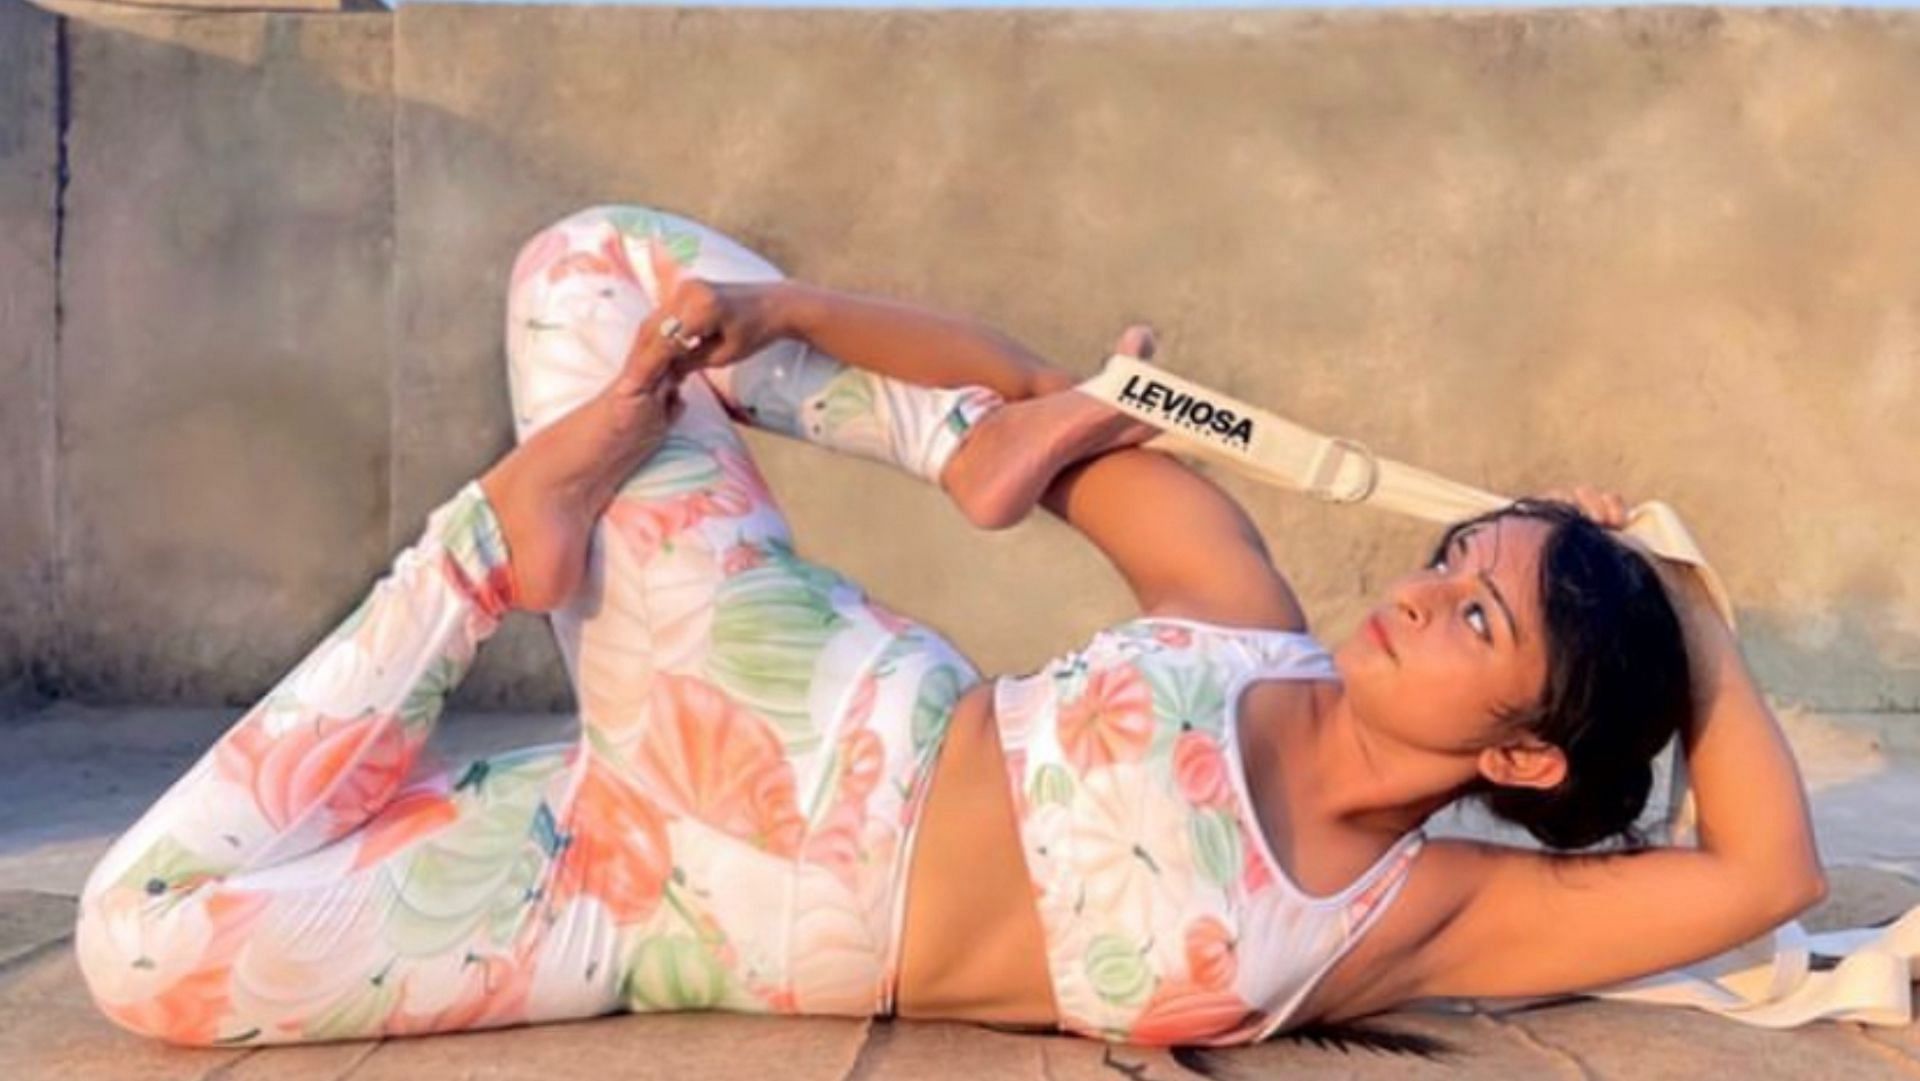 A Yoga strap makes yoga poses safer and more convenient. (Photo via Instagram/shuvi.dobhal)